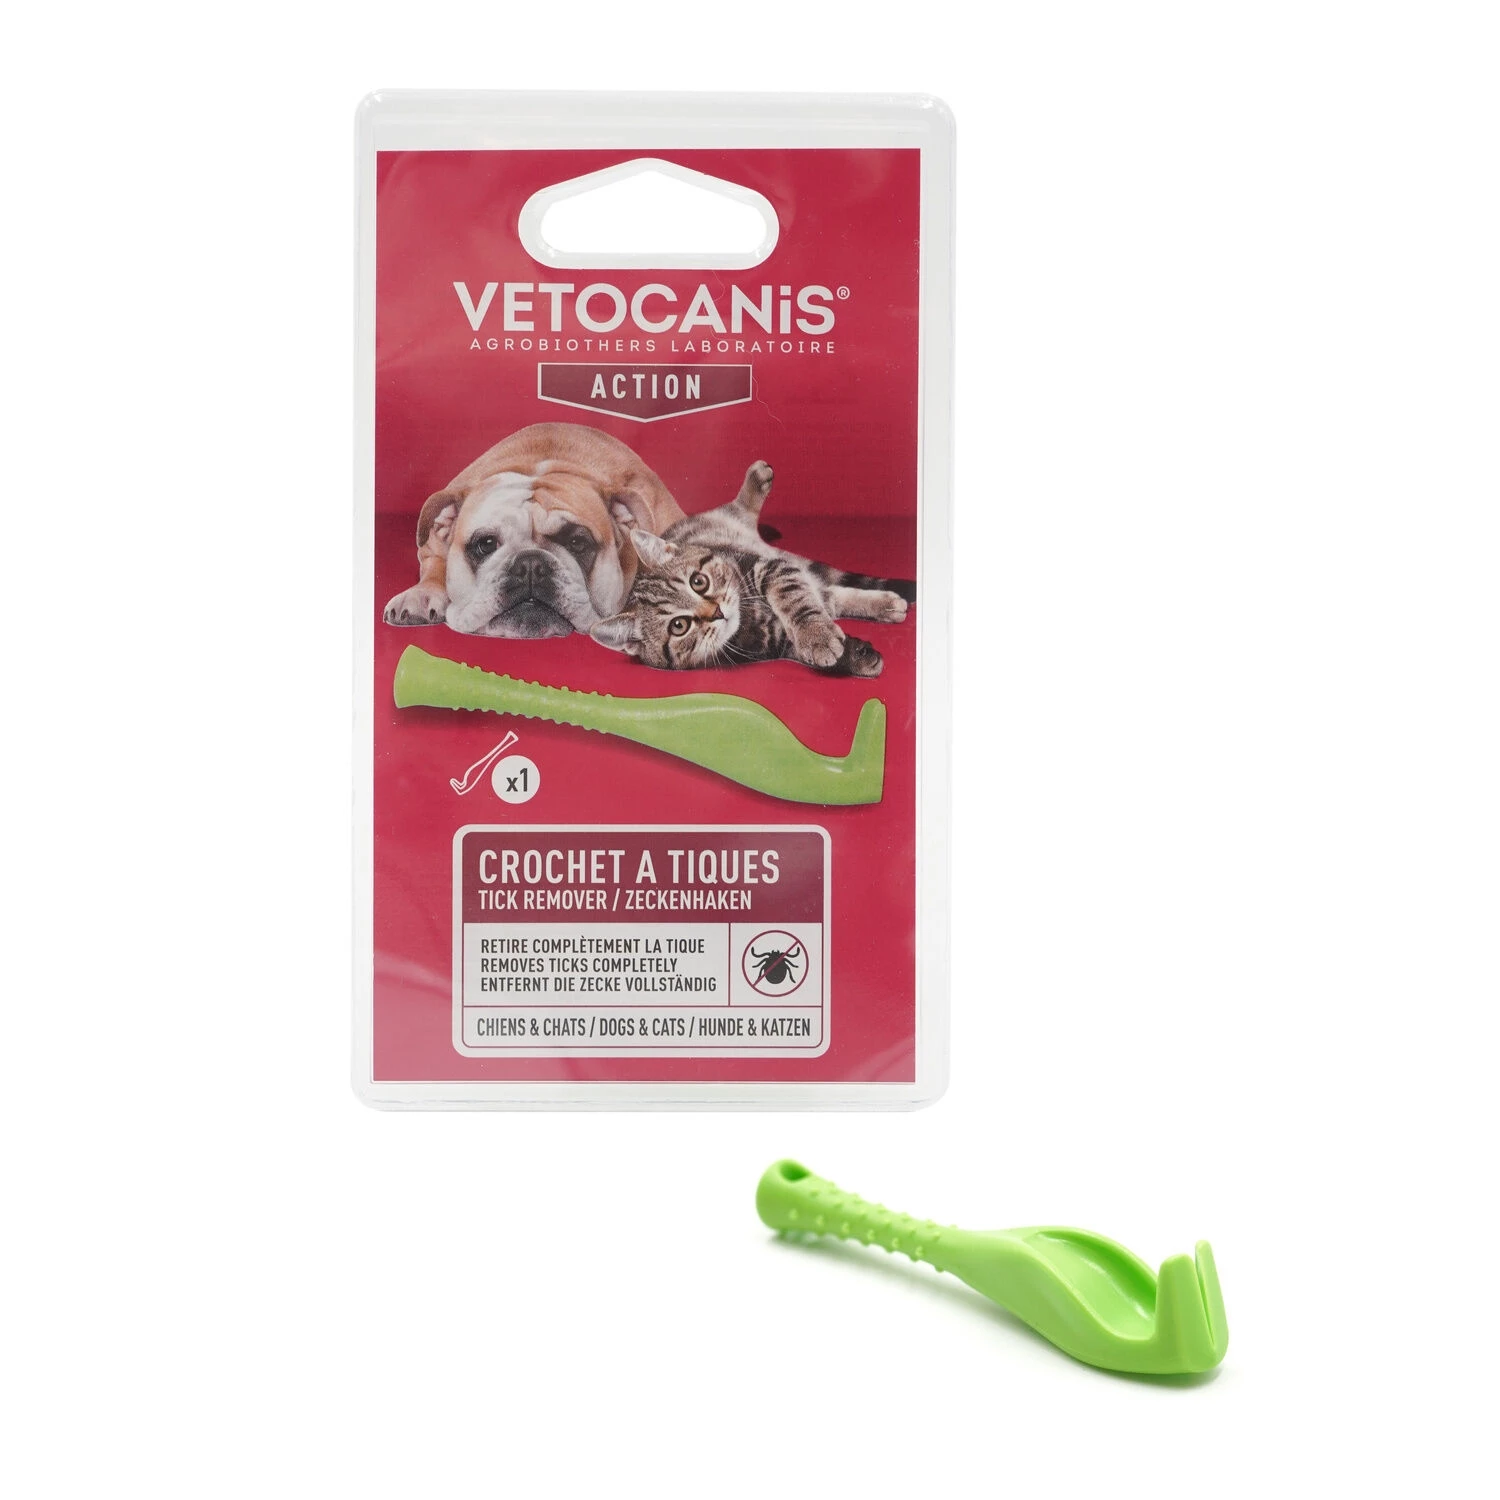 Antiparasitikum gegen Zecken bei Hunden - Vetocanis